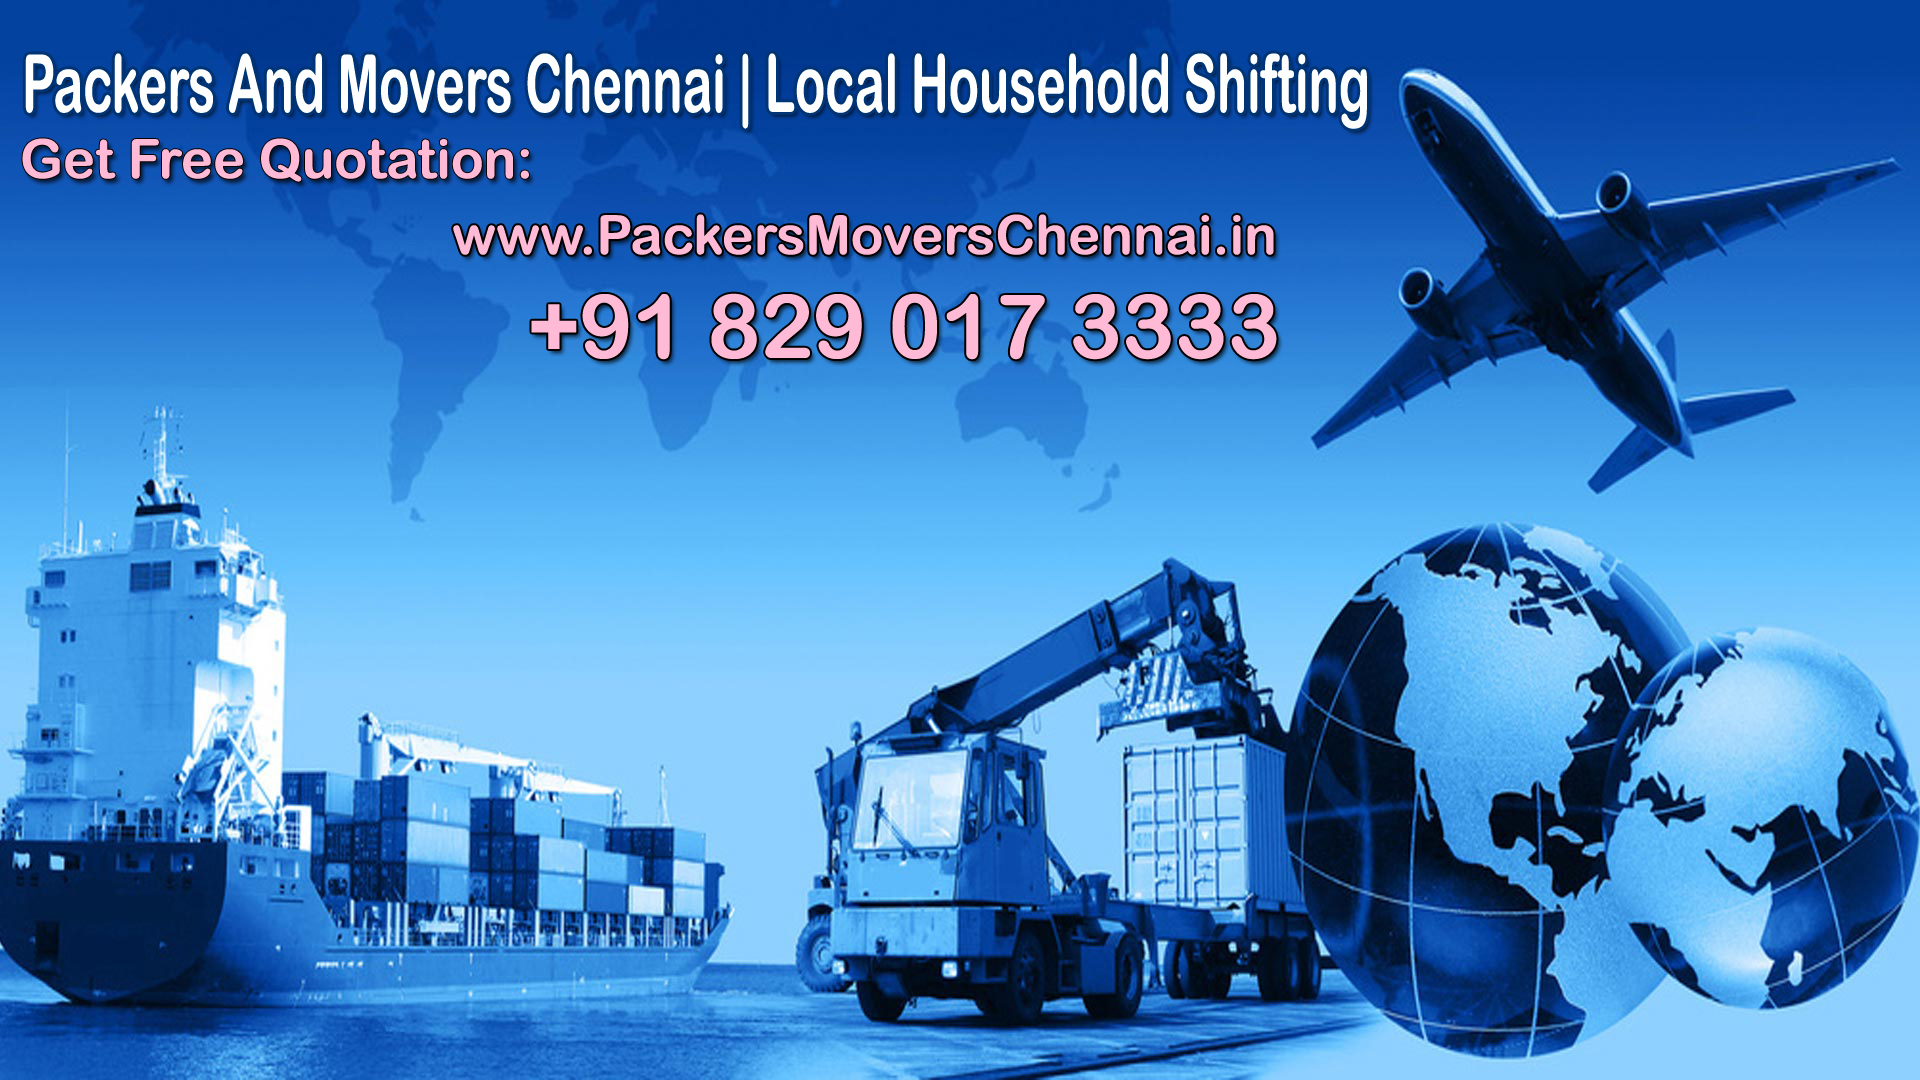 packers-movers-chennai-banner.jpg